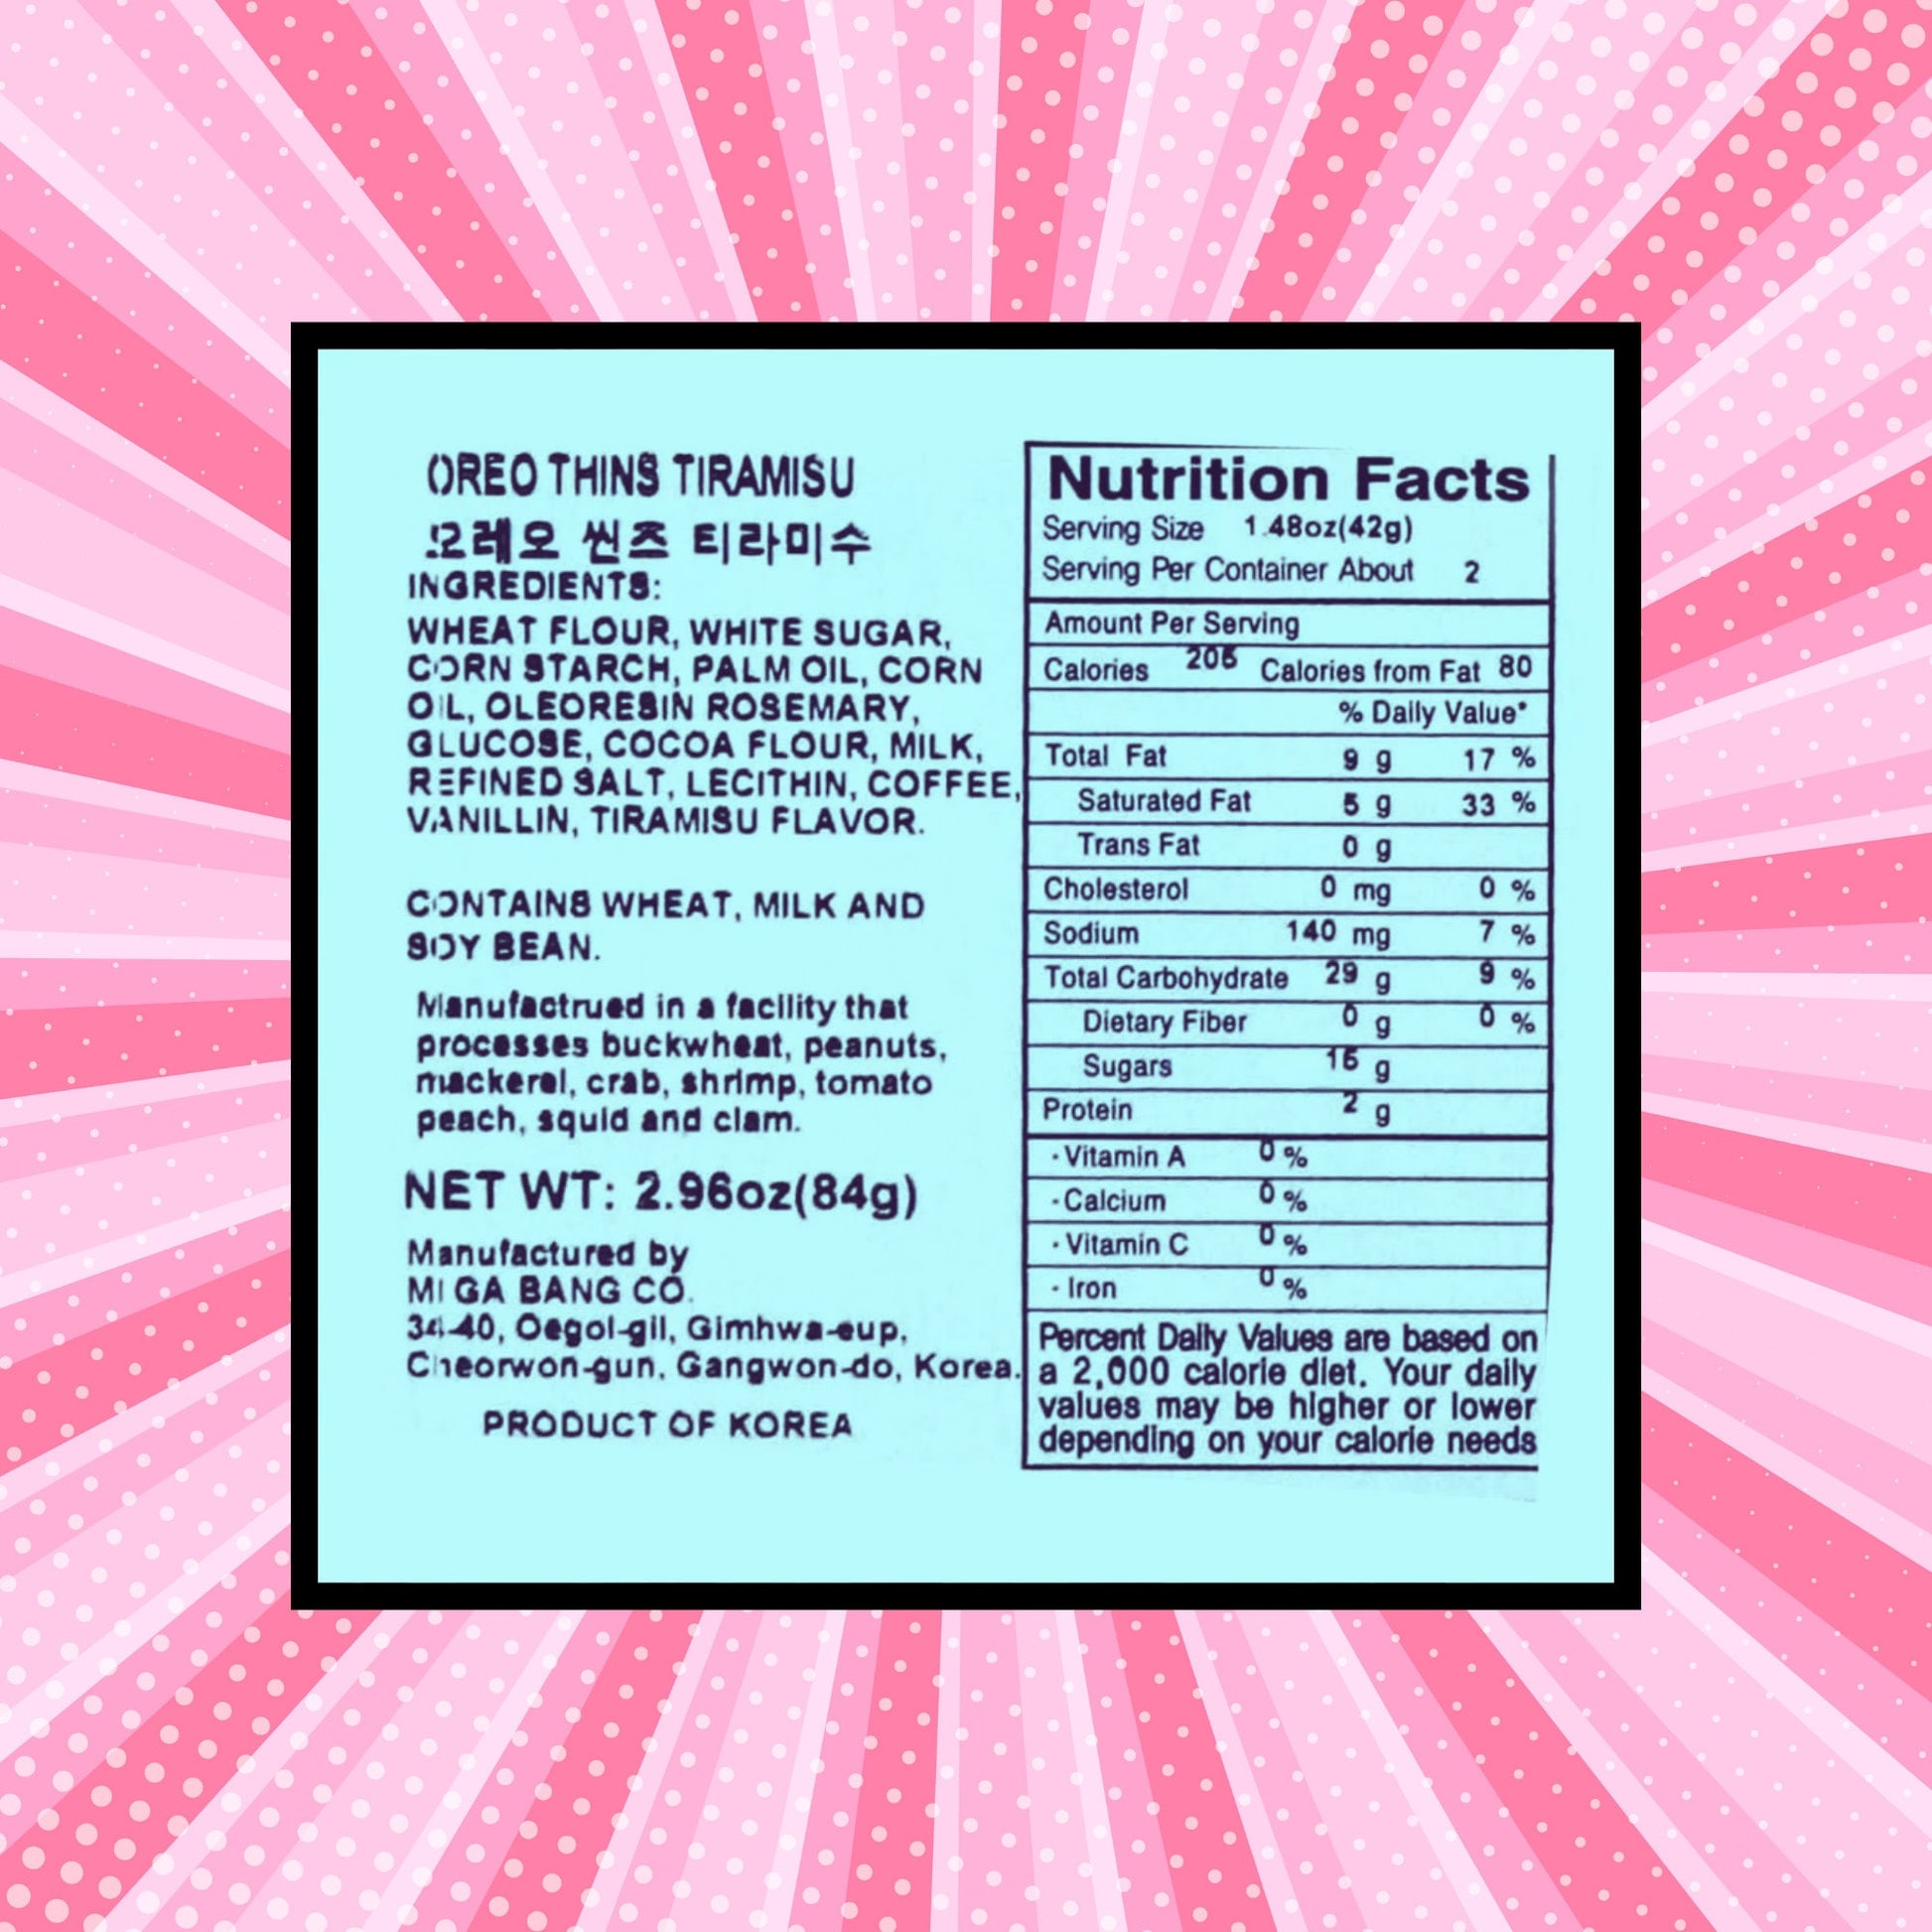 Korean Oreo Thins - Tiramisu Flavor (Ingredients with Nutrition Facts)